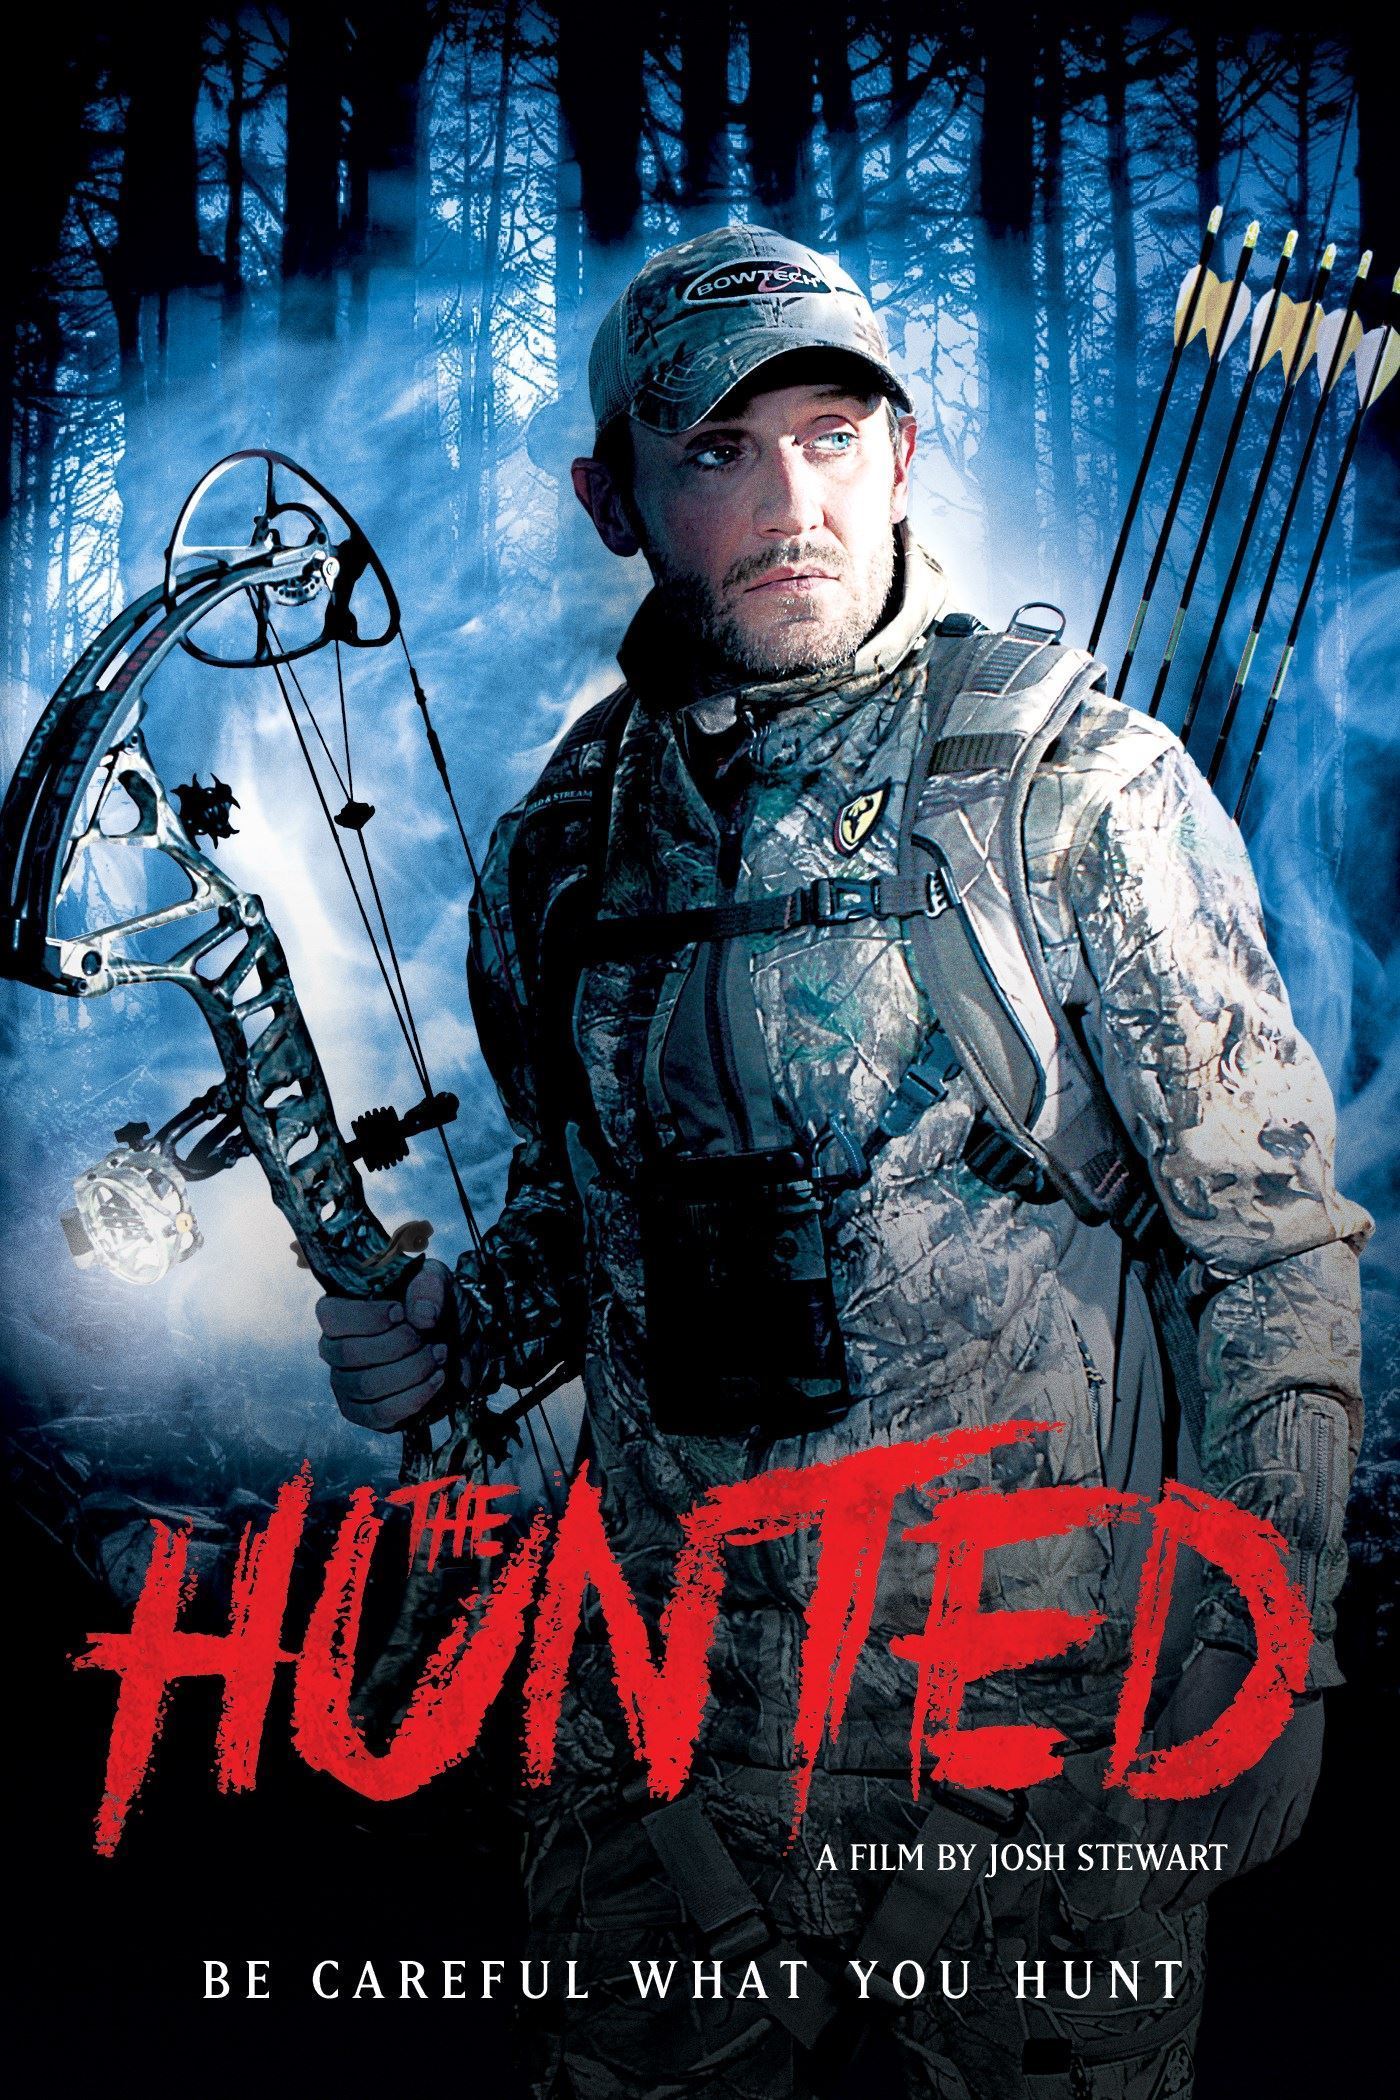 hunted movie 2013